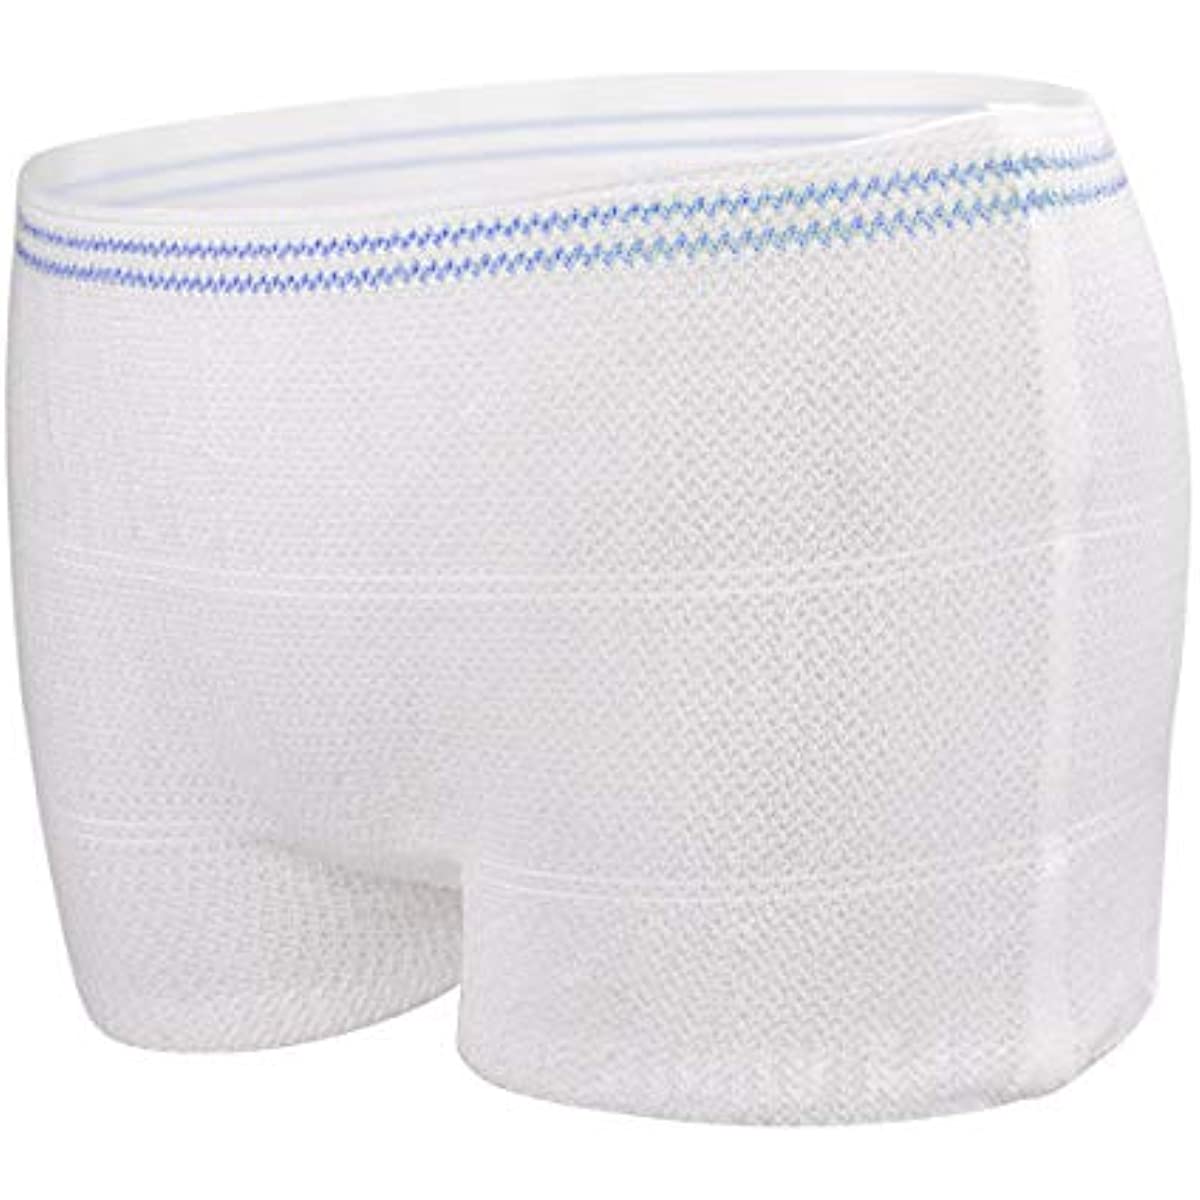 Postpartum Underwear - Comfortable & Breathable Mesh Design – Mother Mother